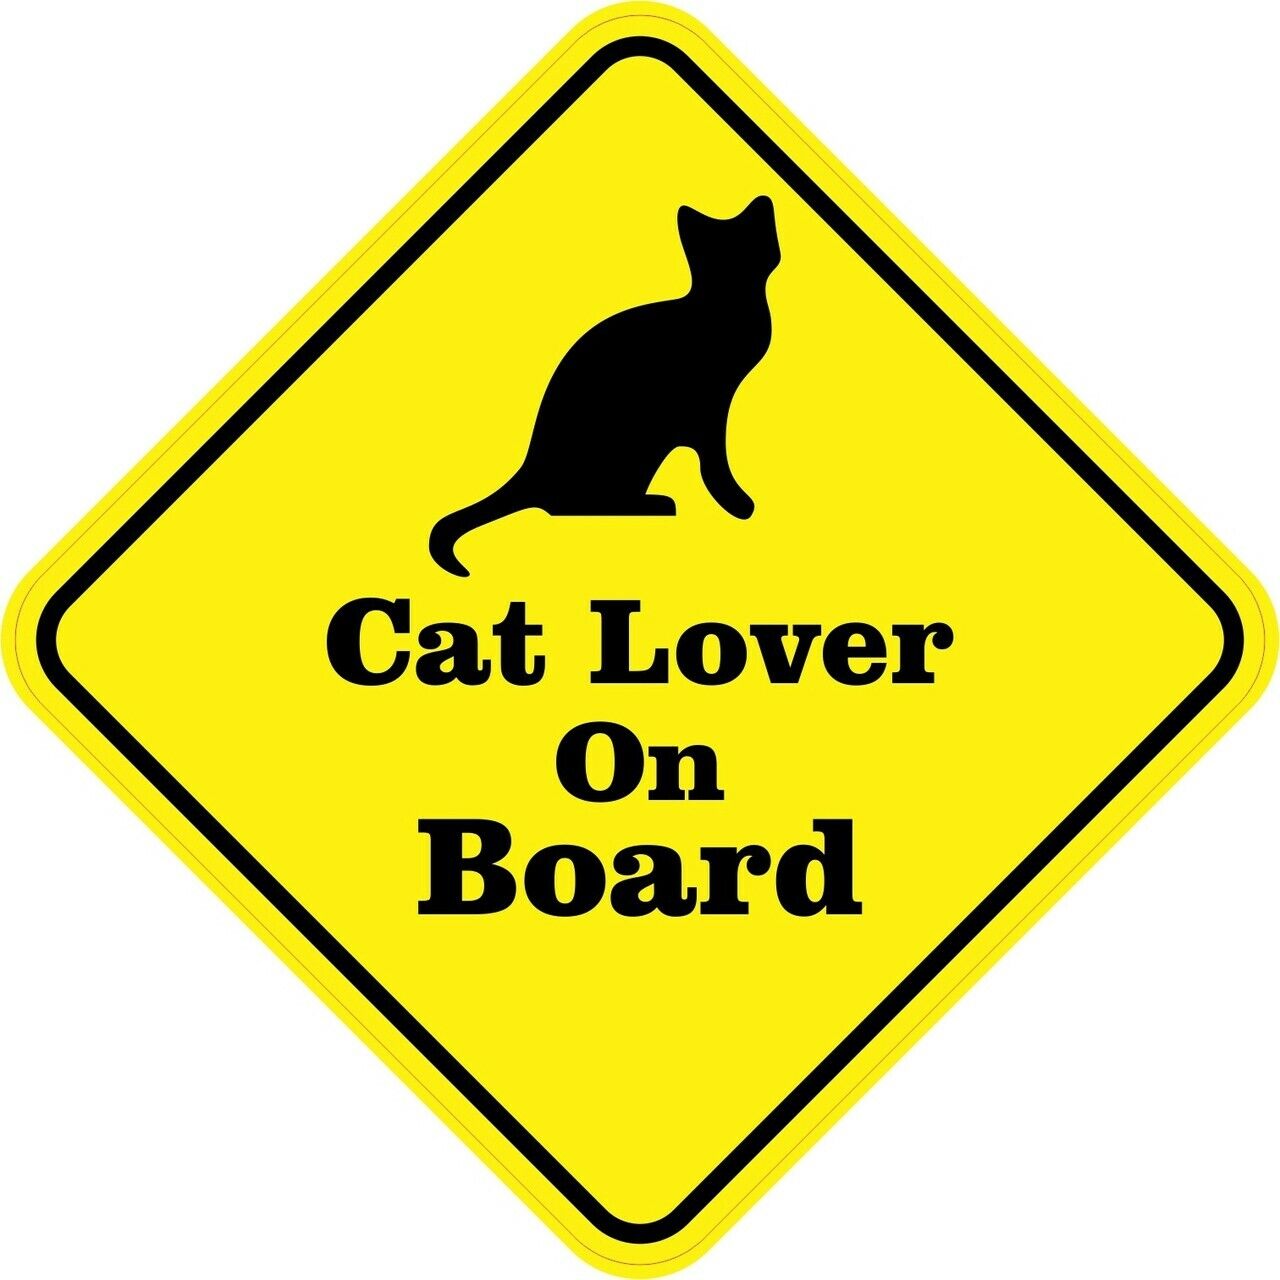 5in x 5in Silhouette Cat Lover On Board Sticker Car Truck Vehicle Bumper Decal